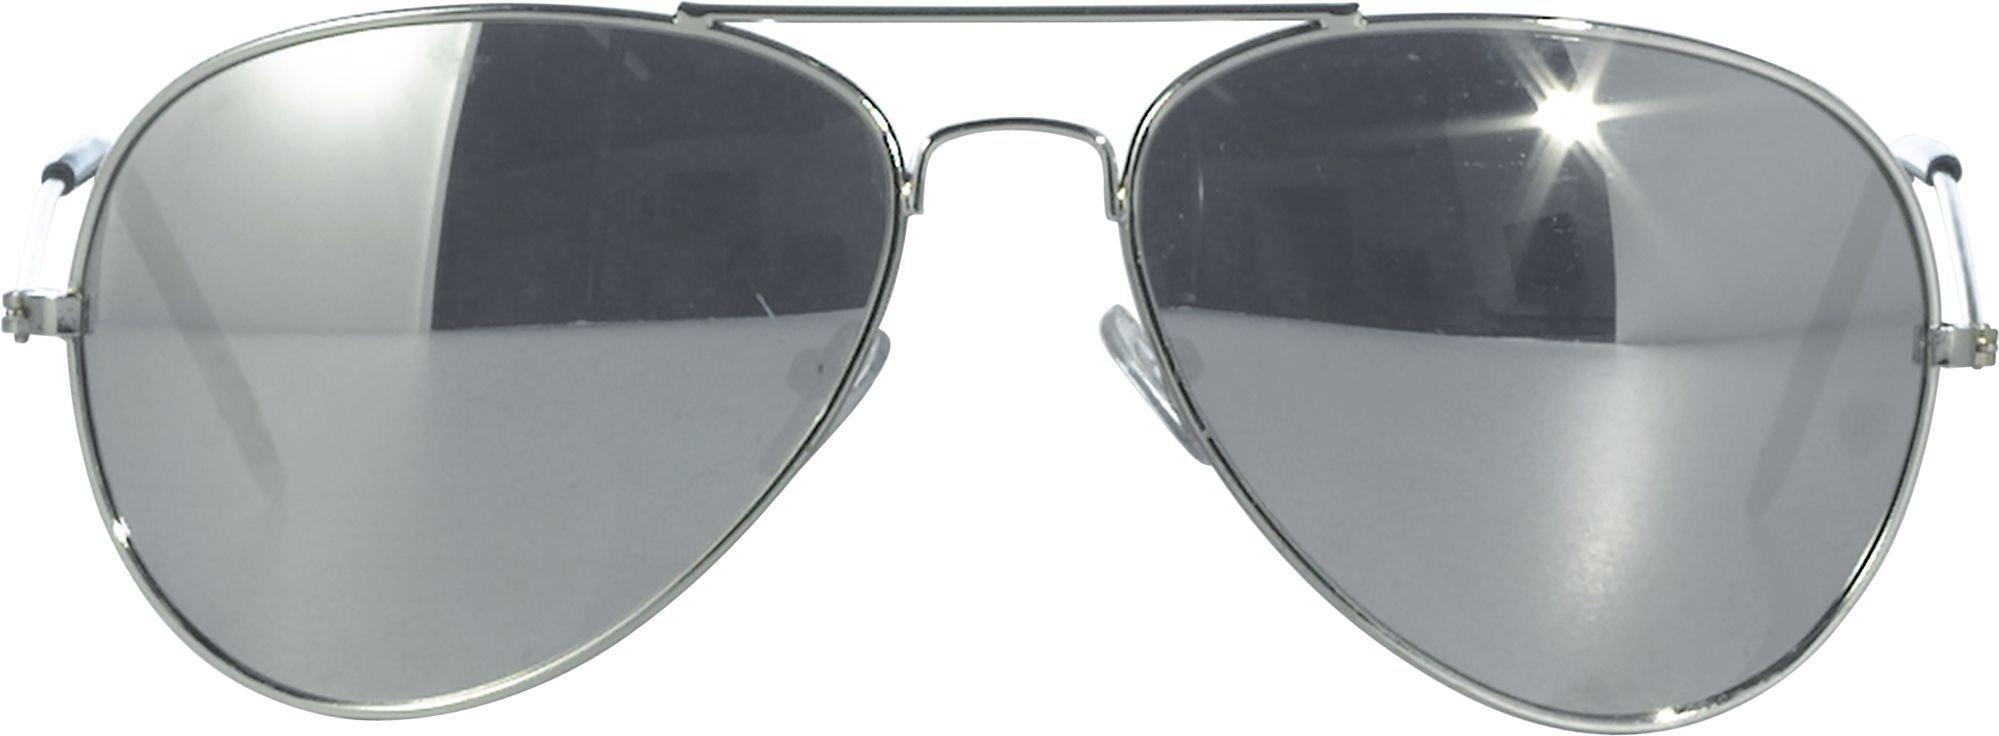 Black & Gold Pilot Aviator Sunglasses Super Dark Lenses 